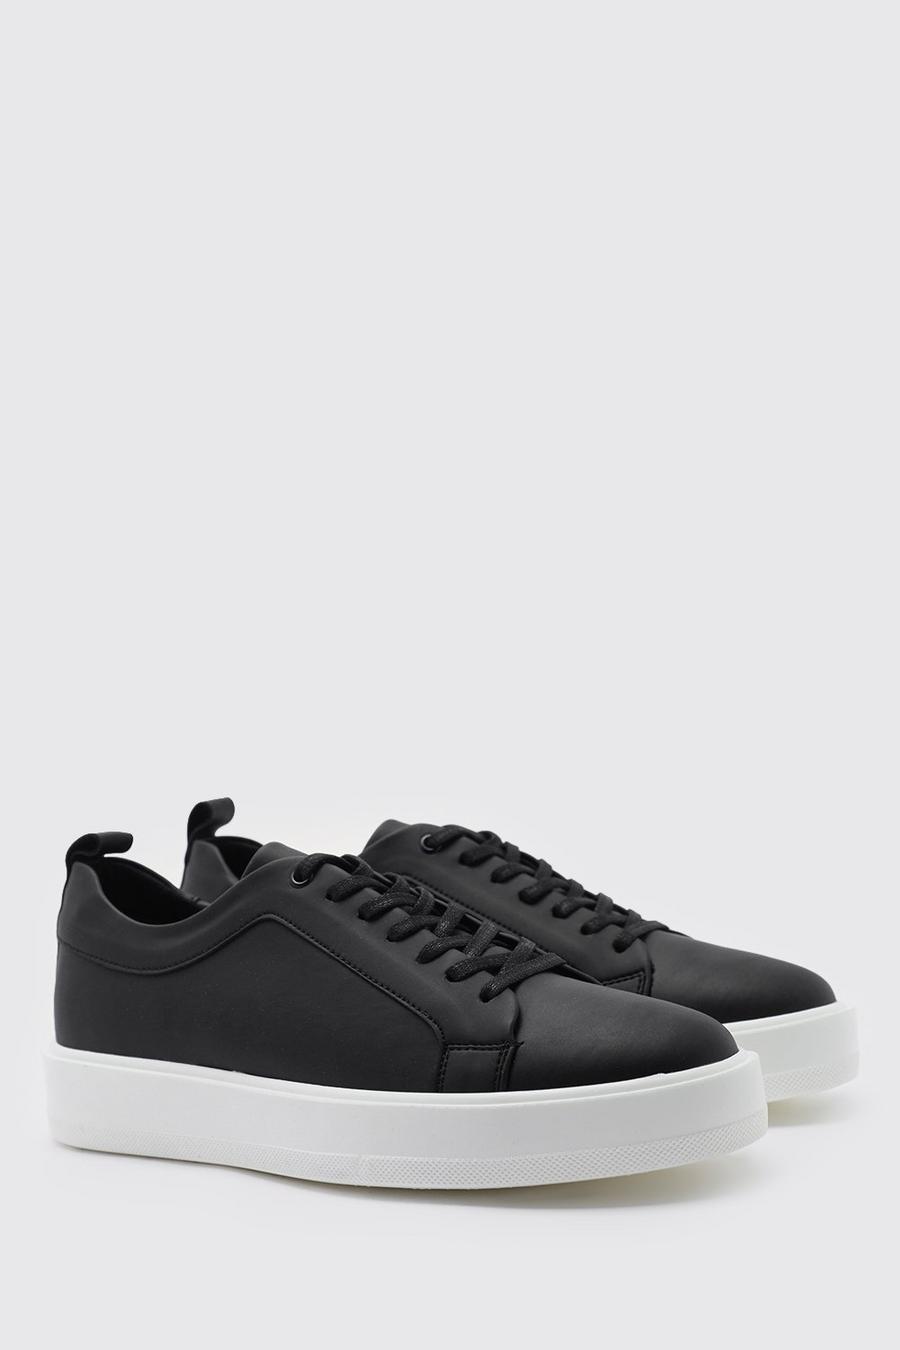 Smarte Sneaker aus mattem Kunstleder, Black schwarz